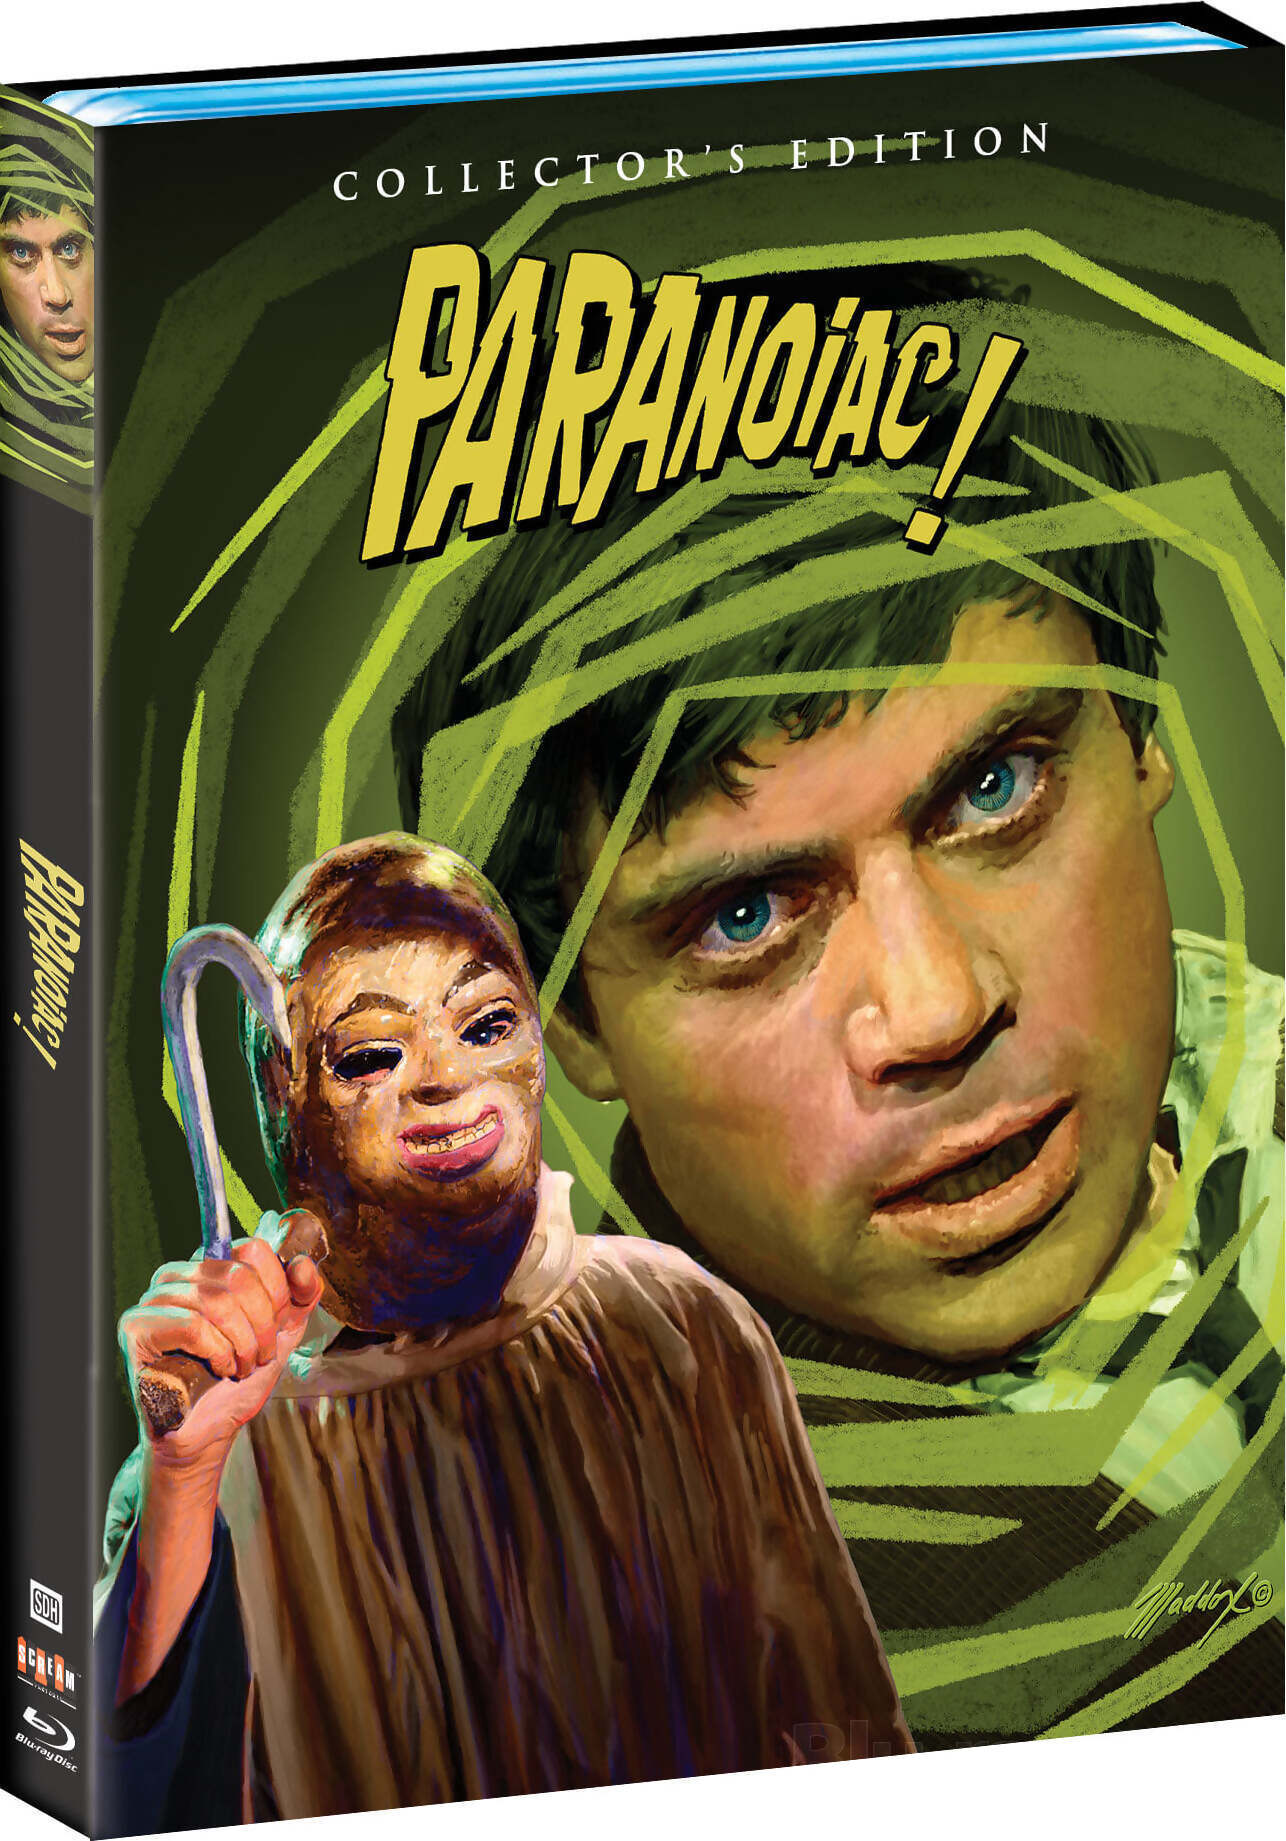 Paranoiac Collector’s Edition Blu-ray